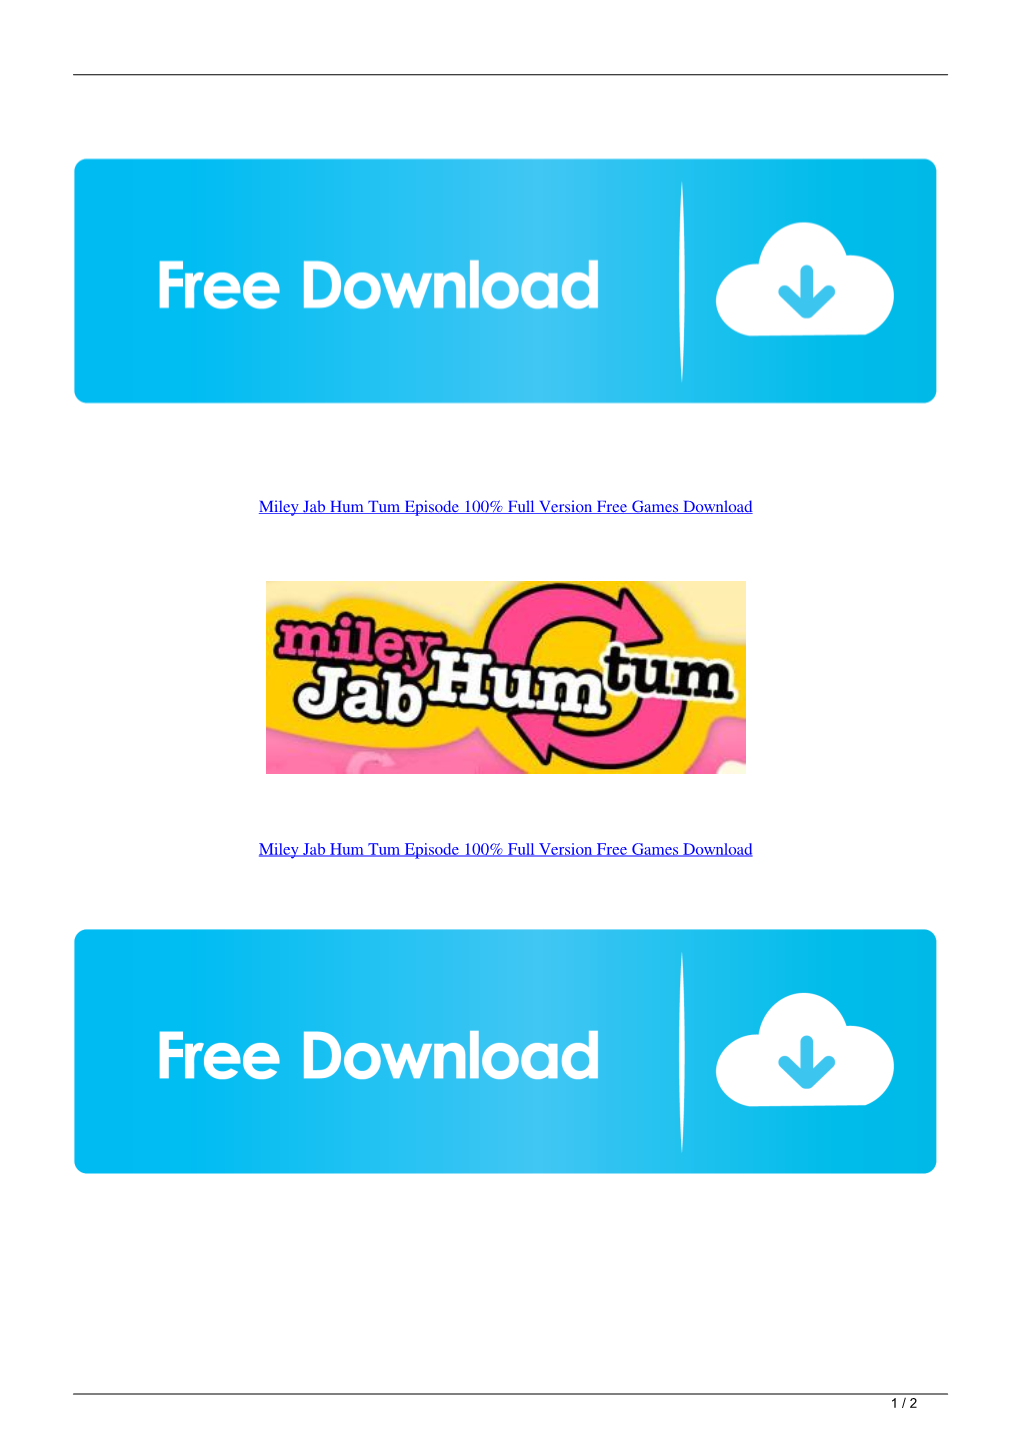 Miley Jab Hum Tum Episode 100 Full Version Free Games Download